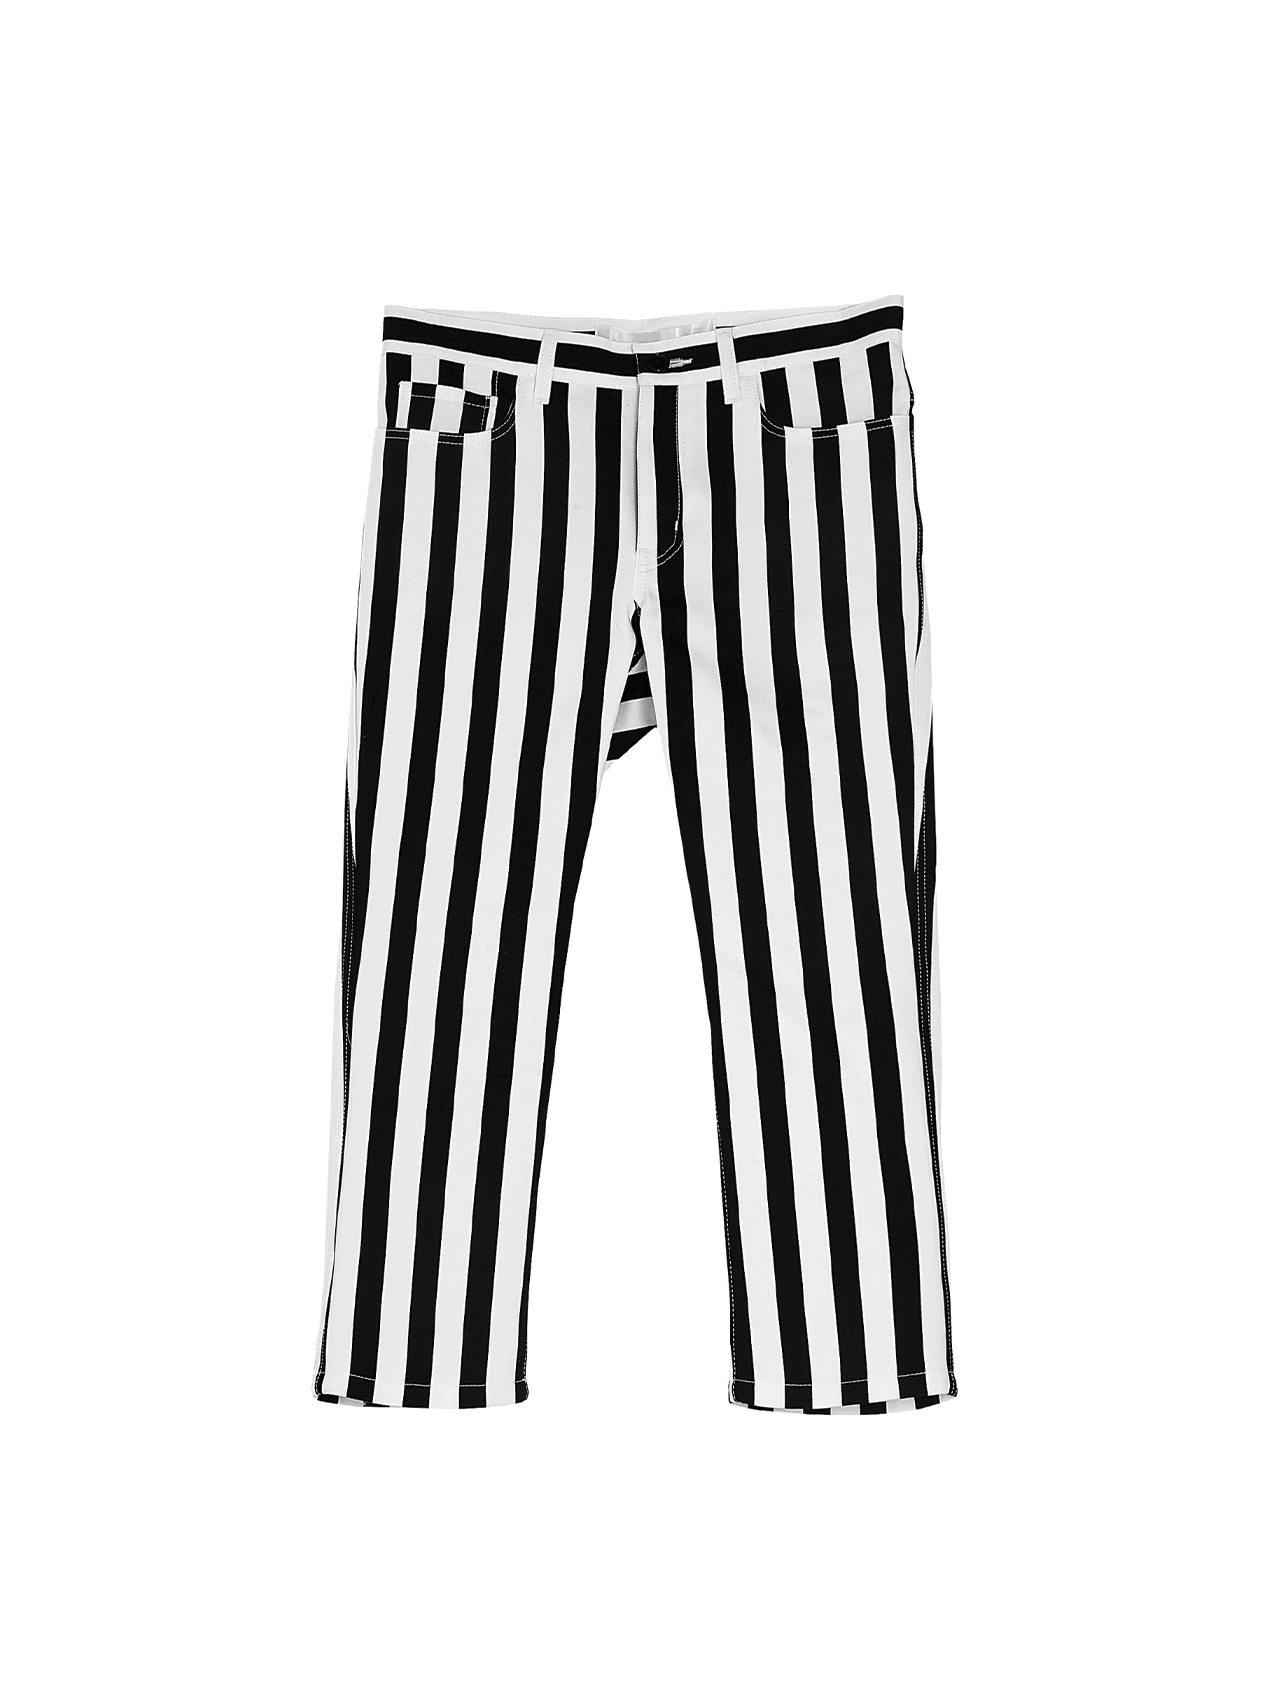 CDG TAO Black/White Striped Pants